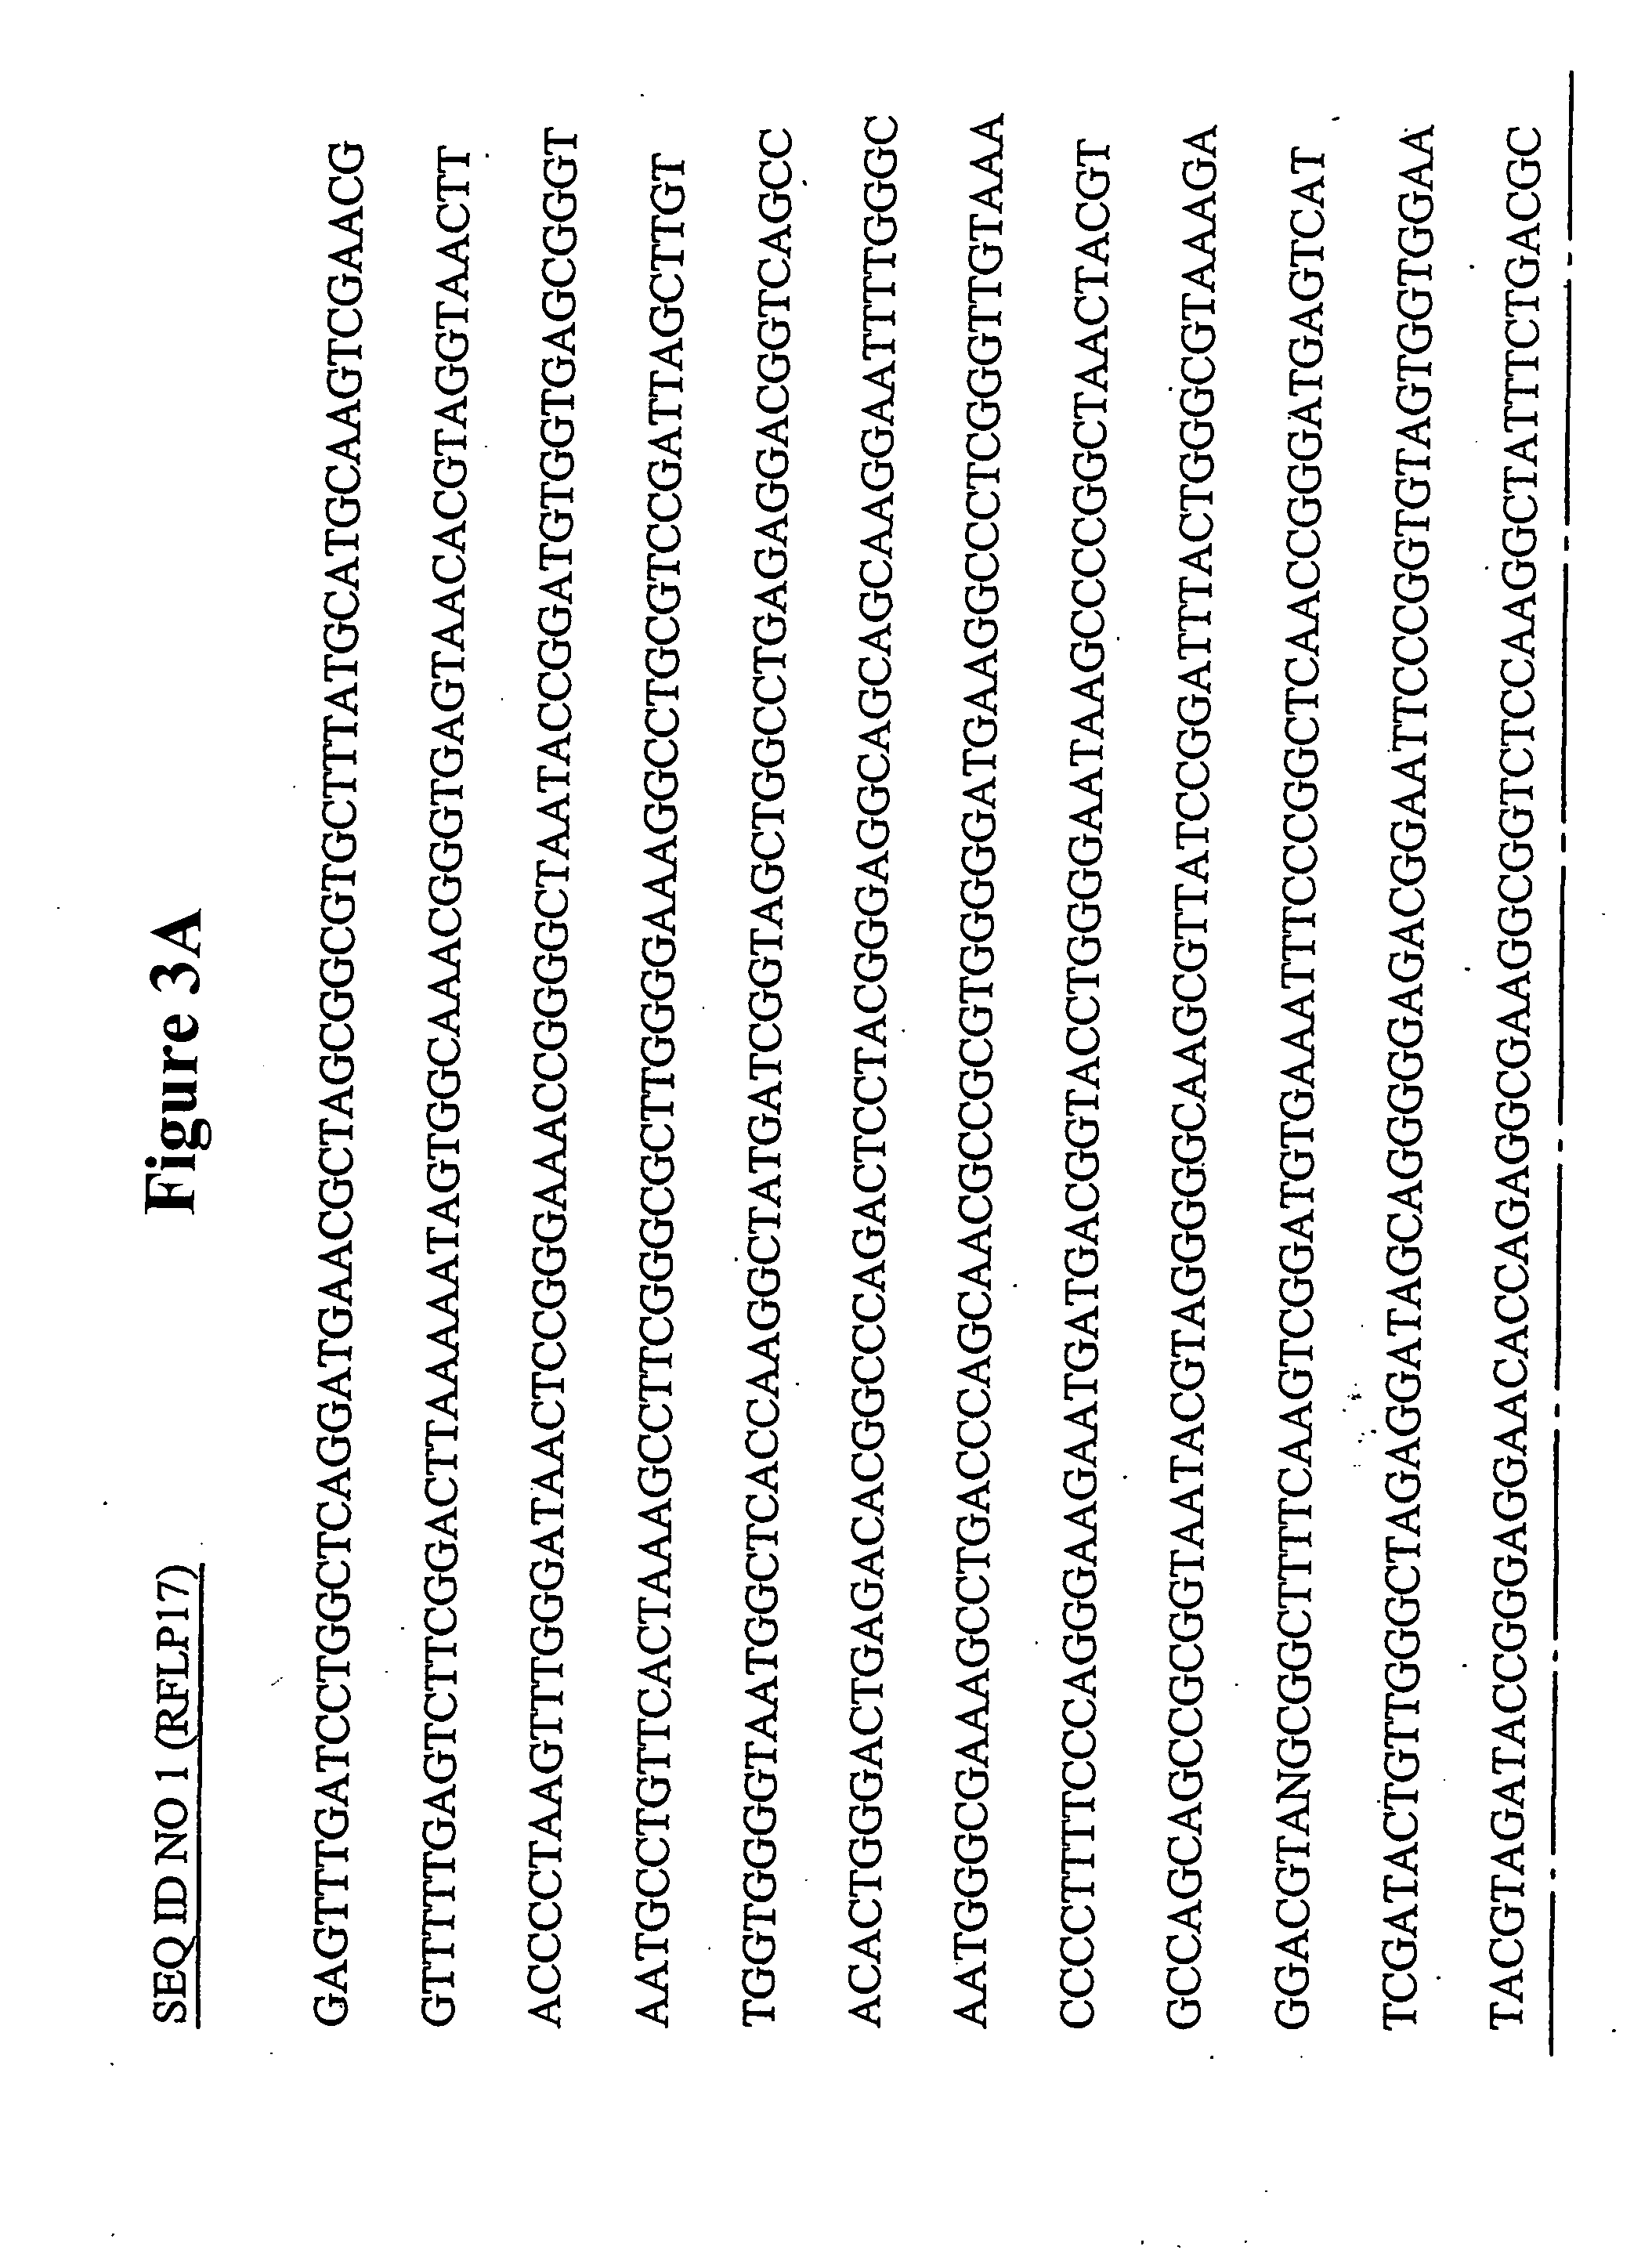 Stimulation of microbial dechlorination of polychlorinated biphenyls with halogenated ethenes